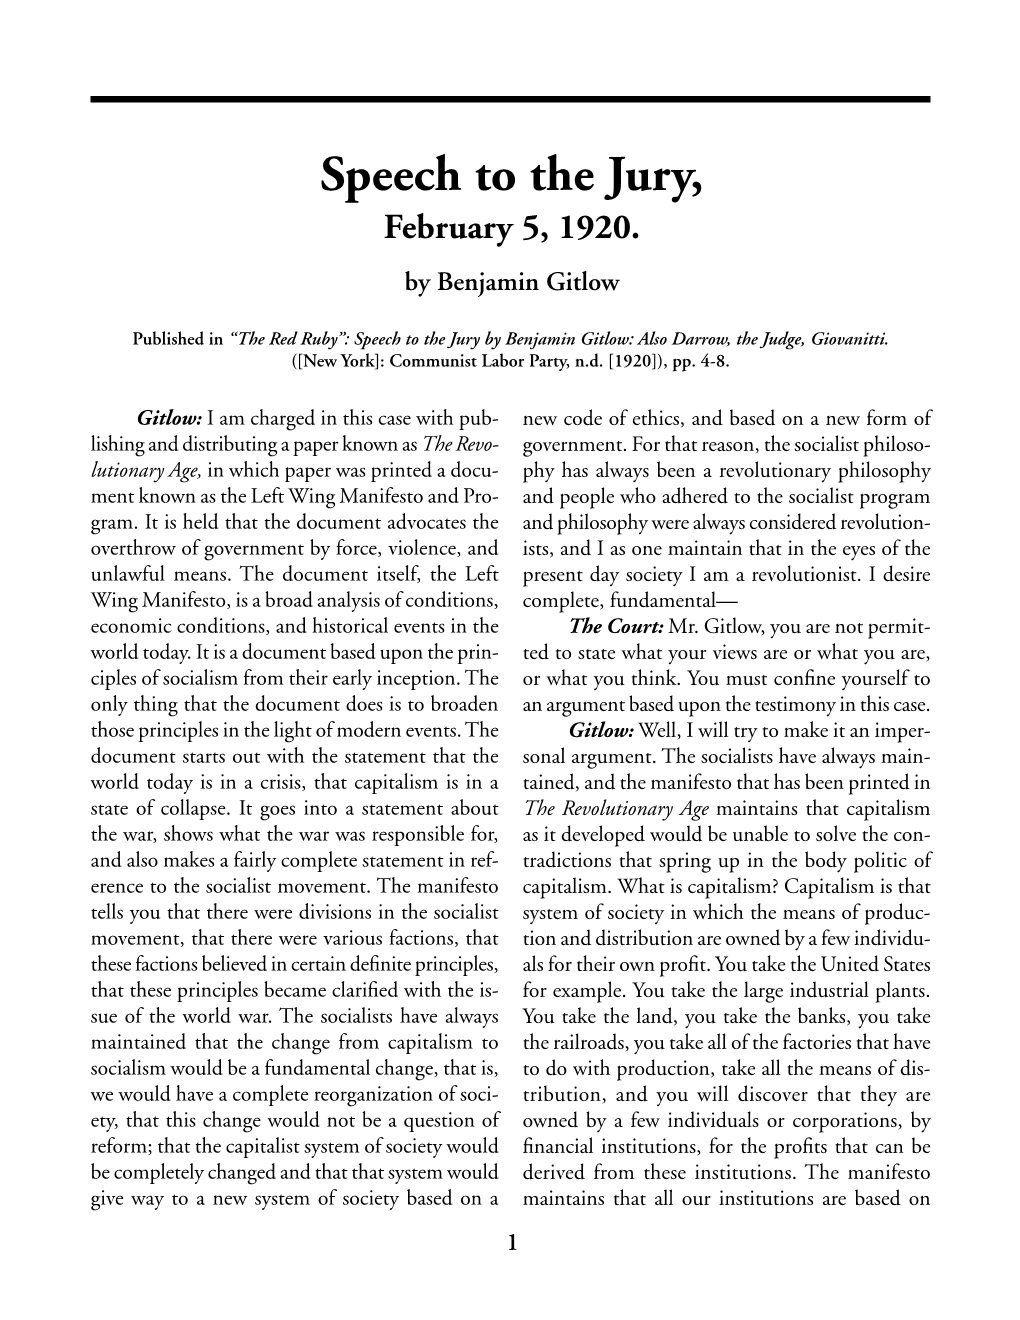 "Speech to the Jury," by Benjamin Gitlow